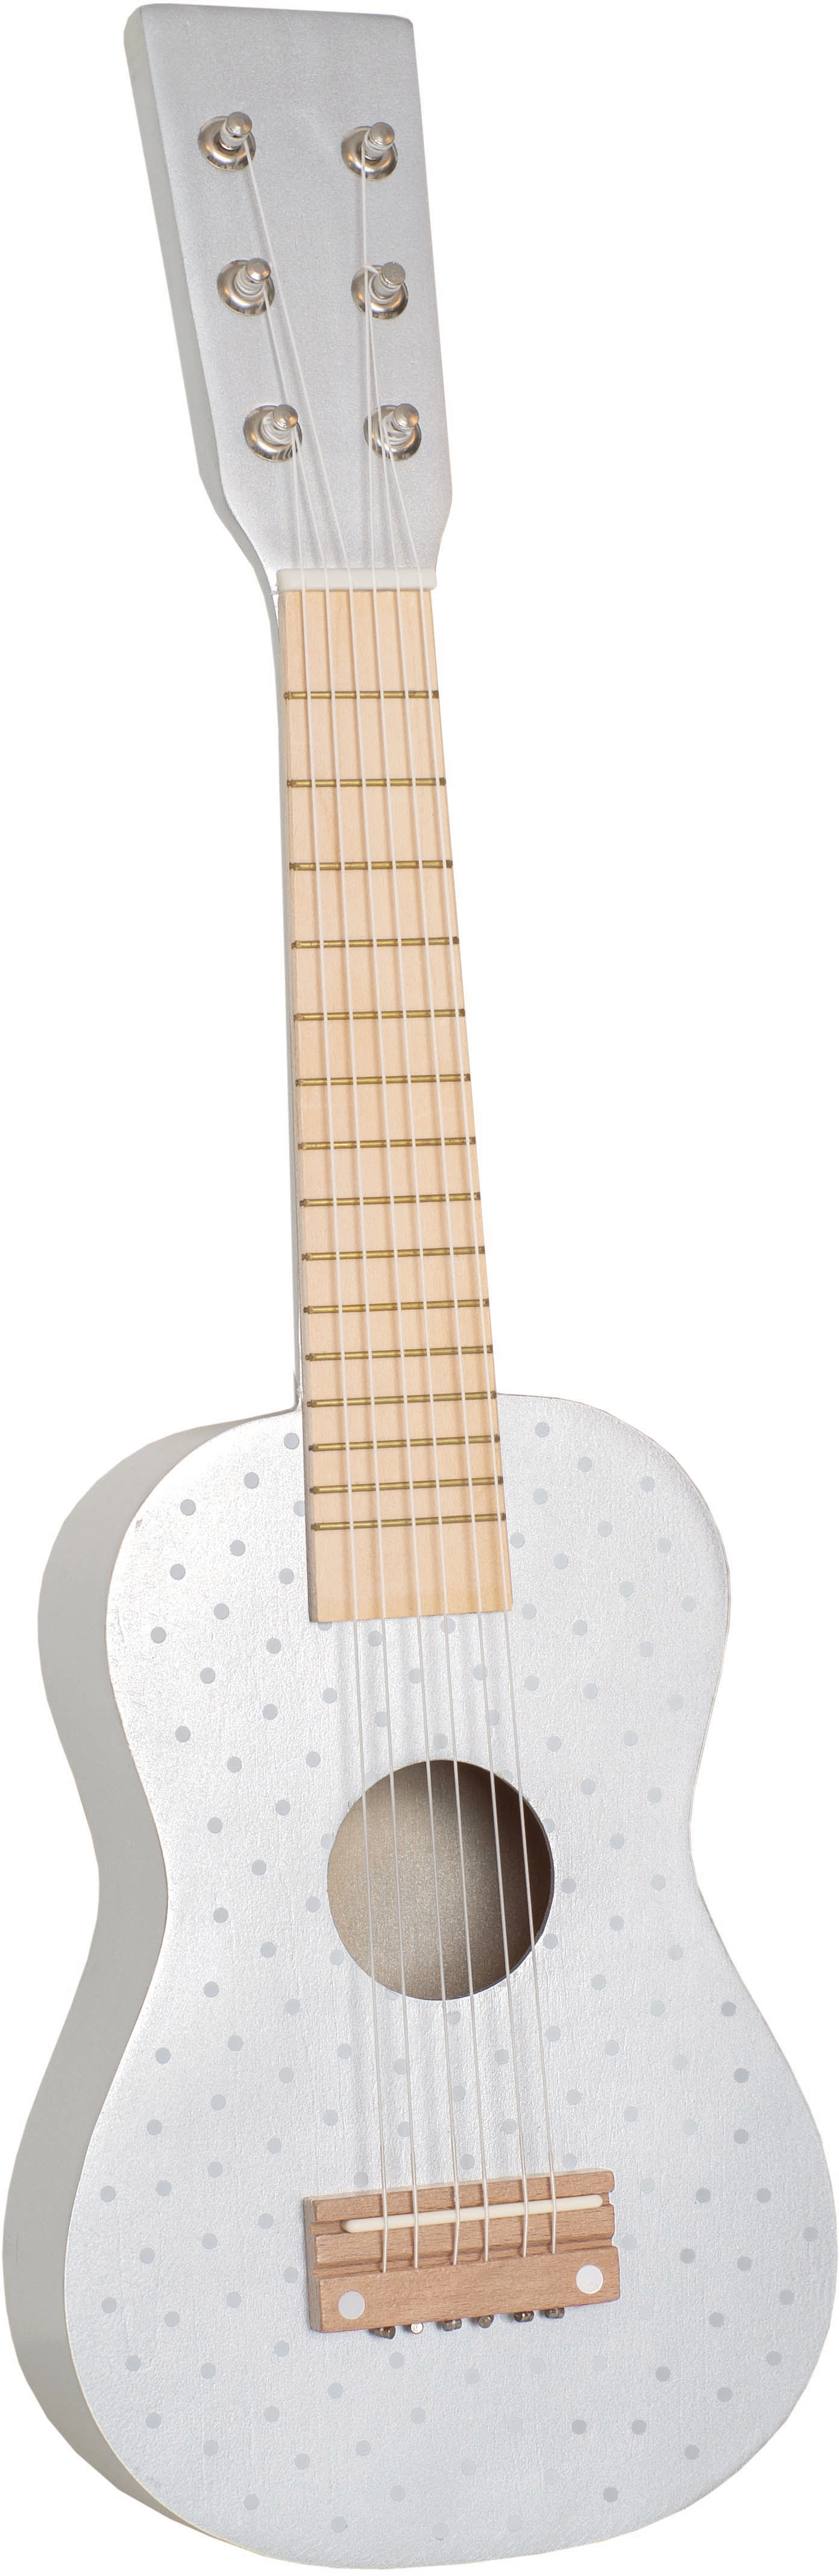 JABADABADO Guitar M14100 argent